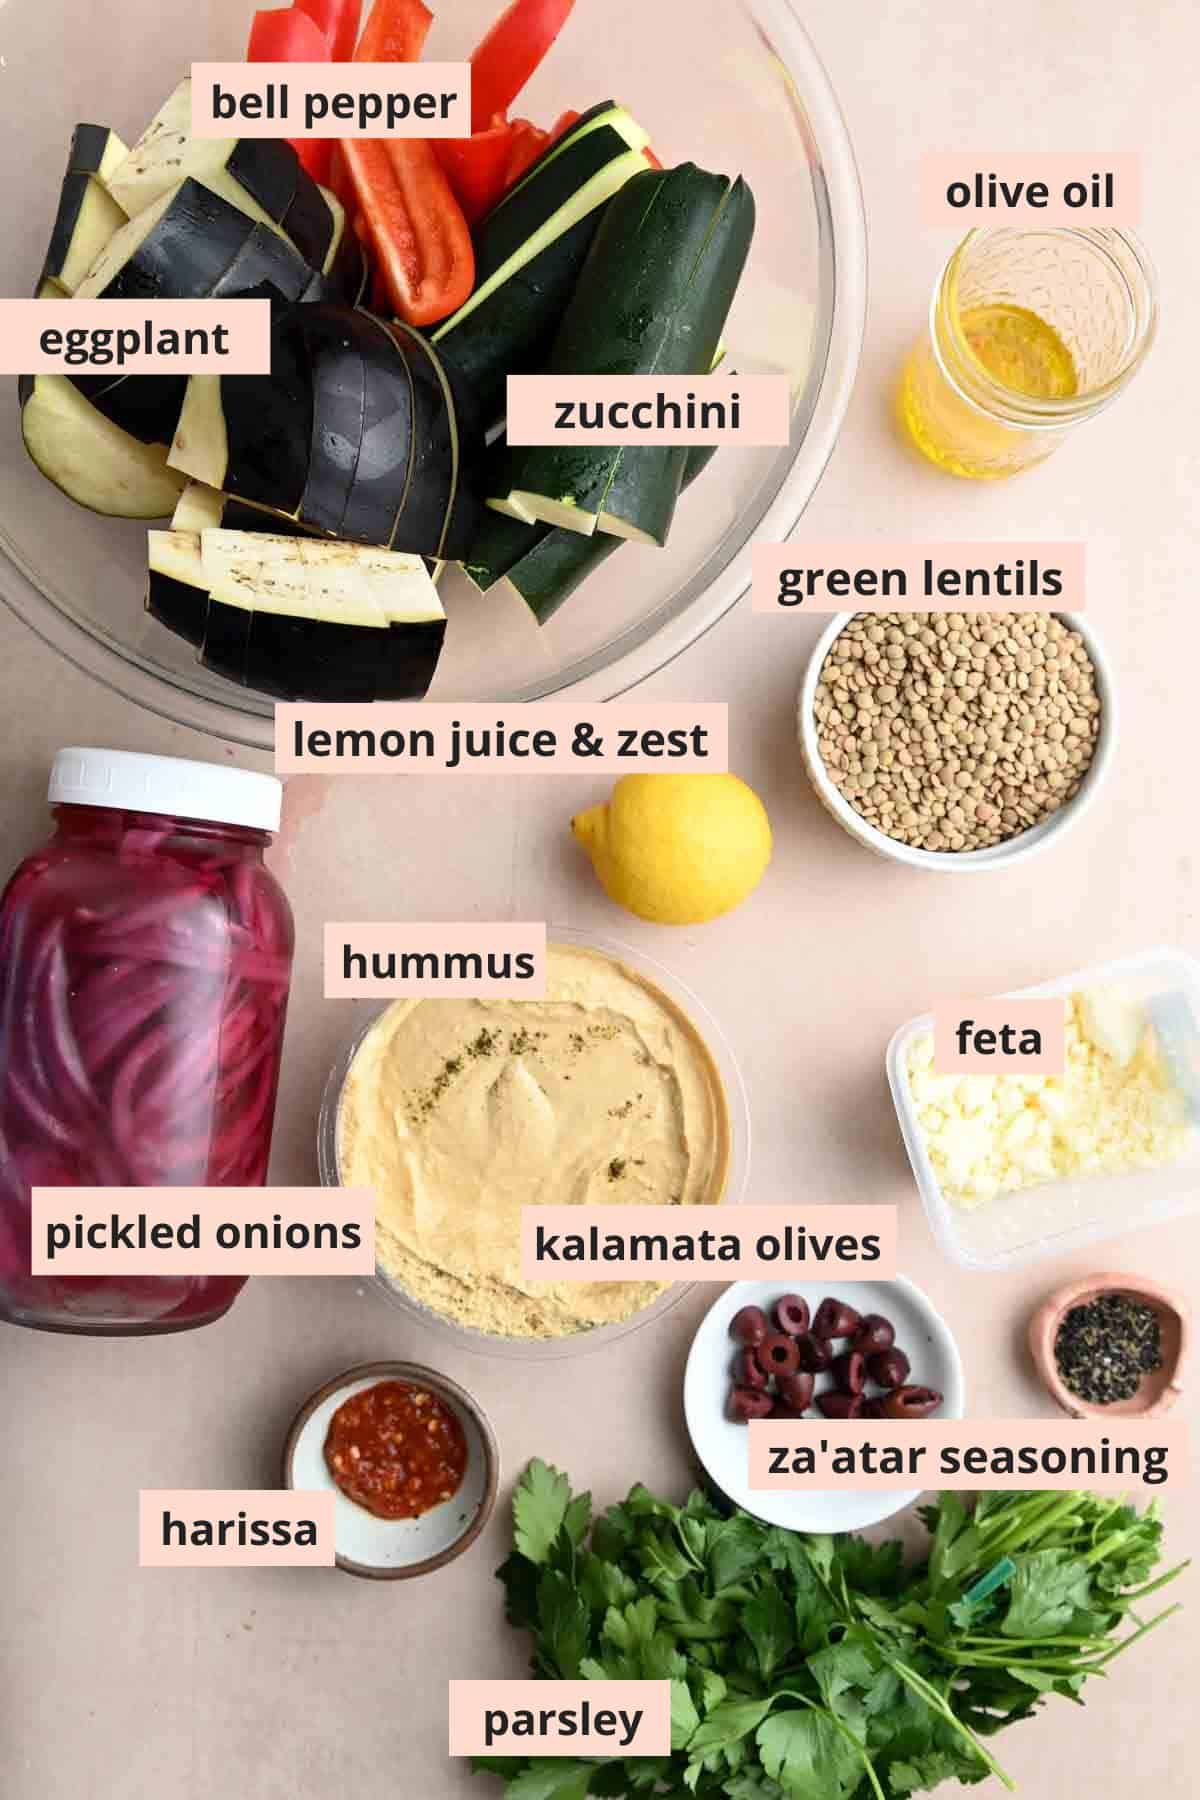 Labeled ingredients used to make hummus bowls.